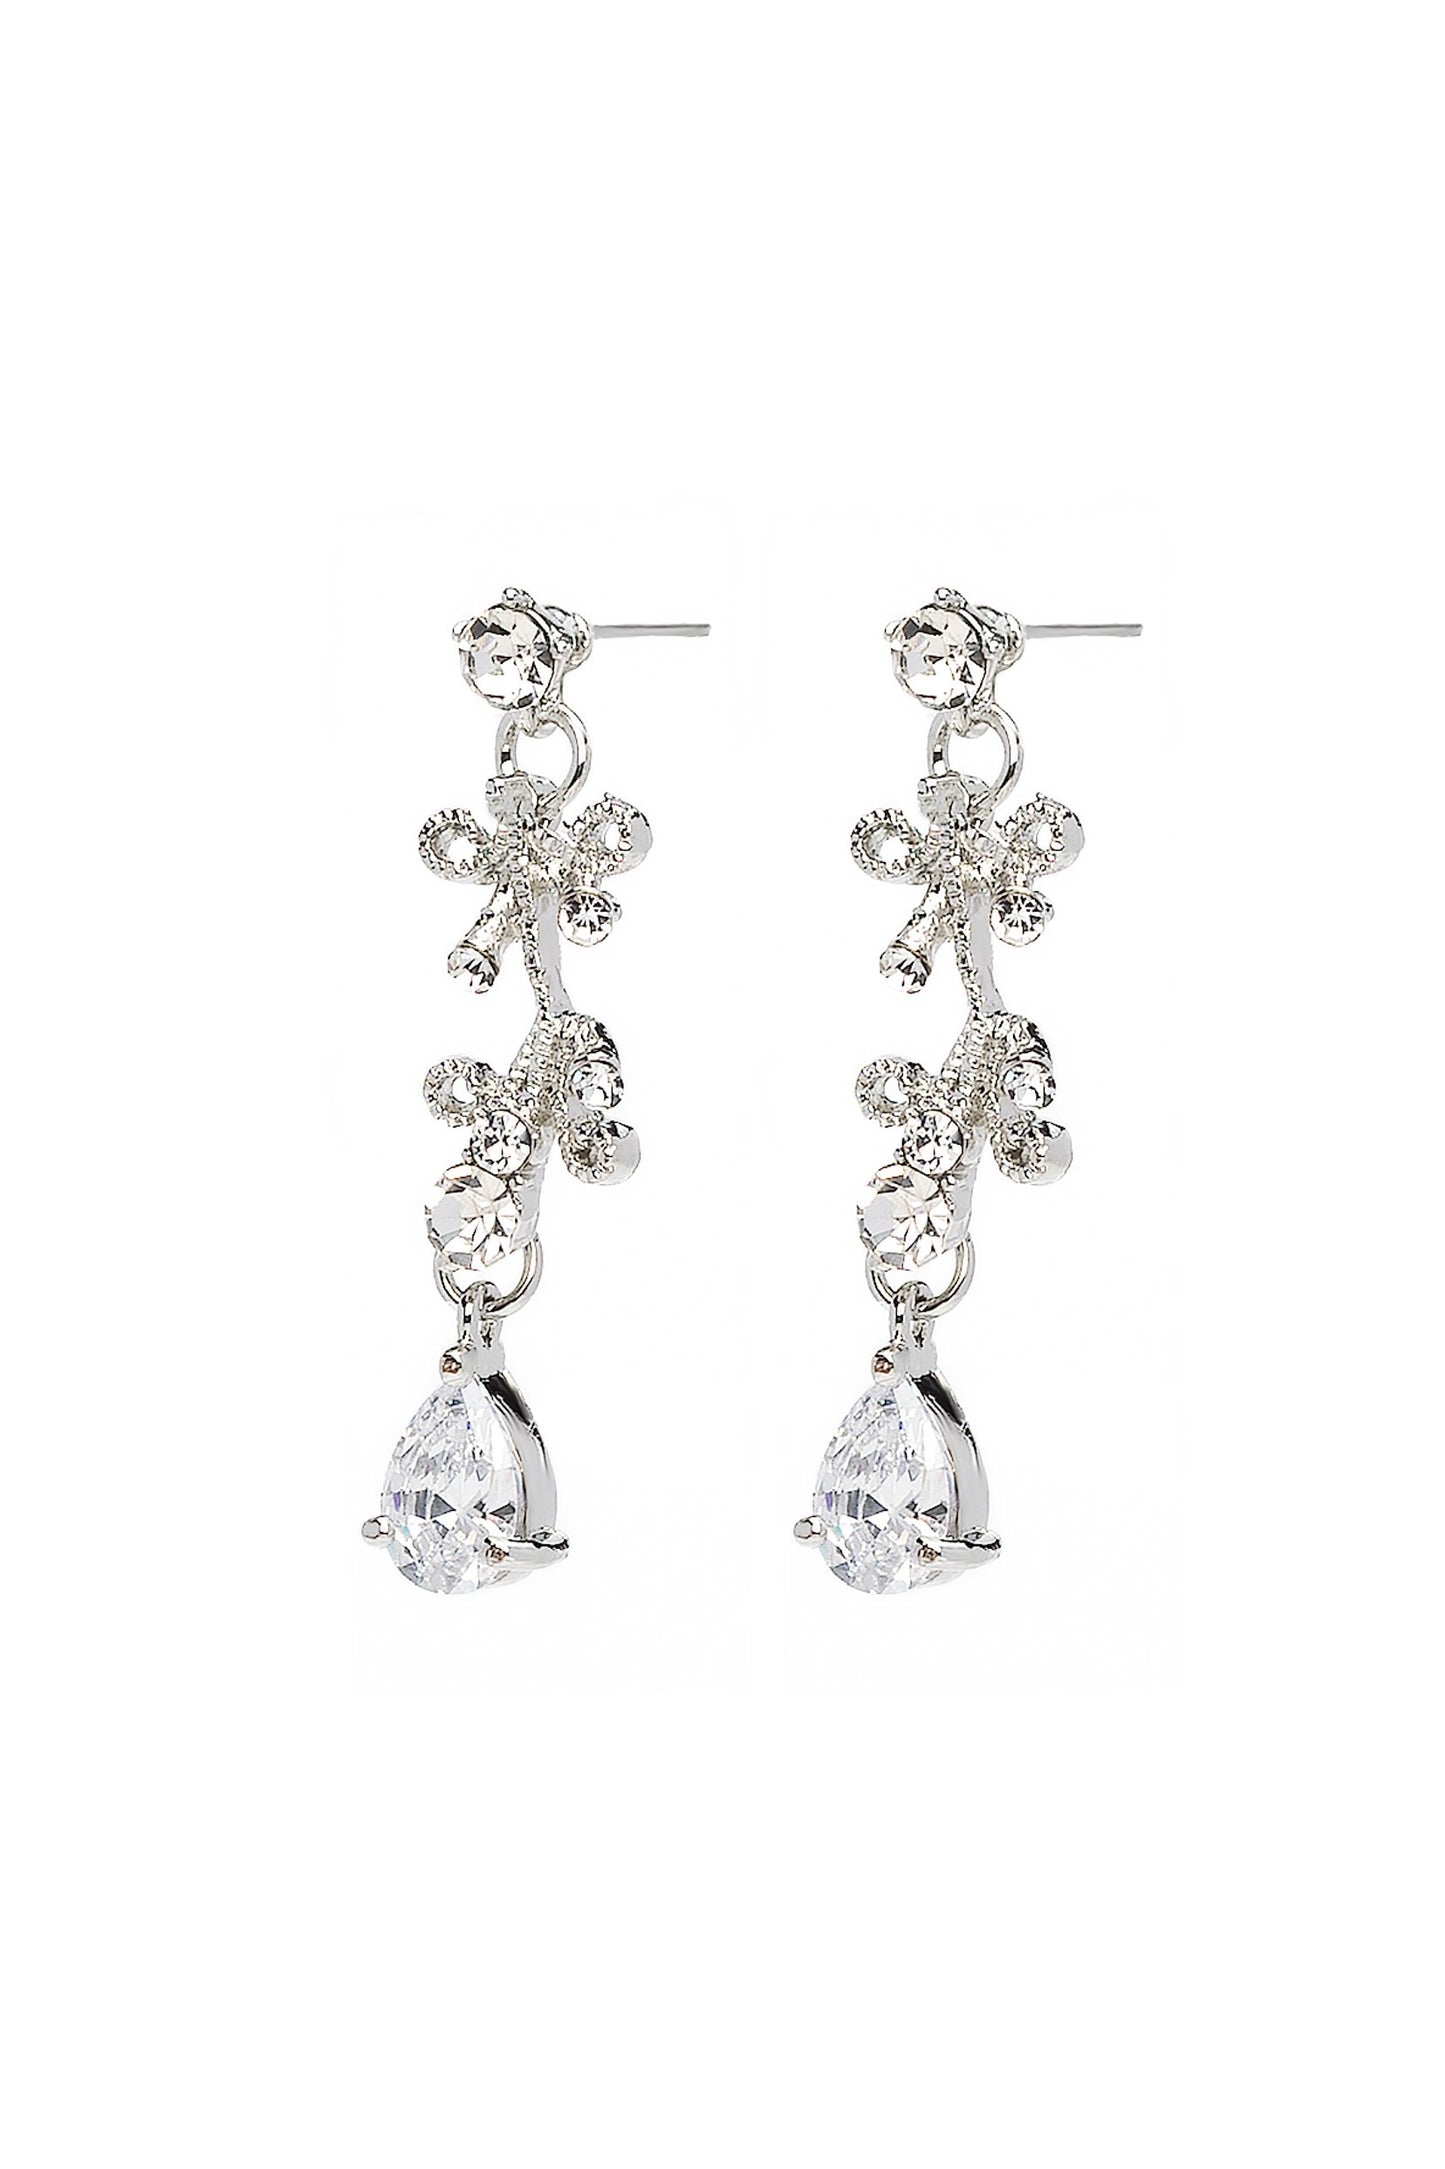 Crystals Rhinestone Tiara Necklace Earrings Jewelry CY0064